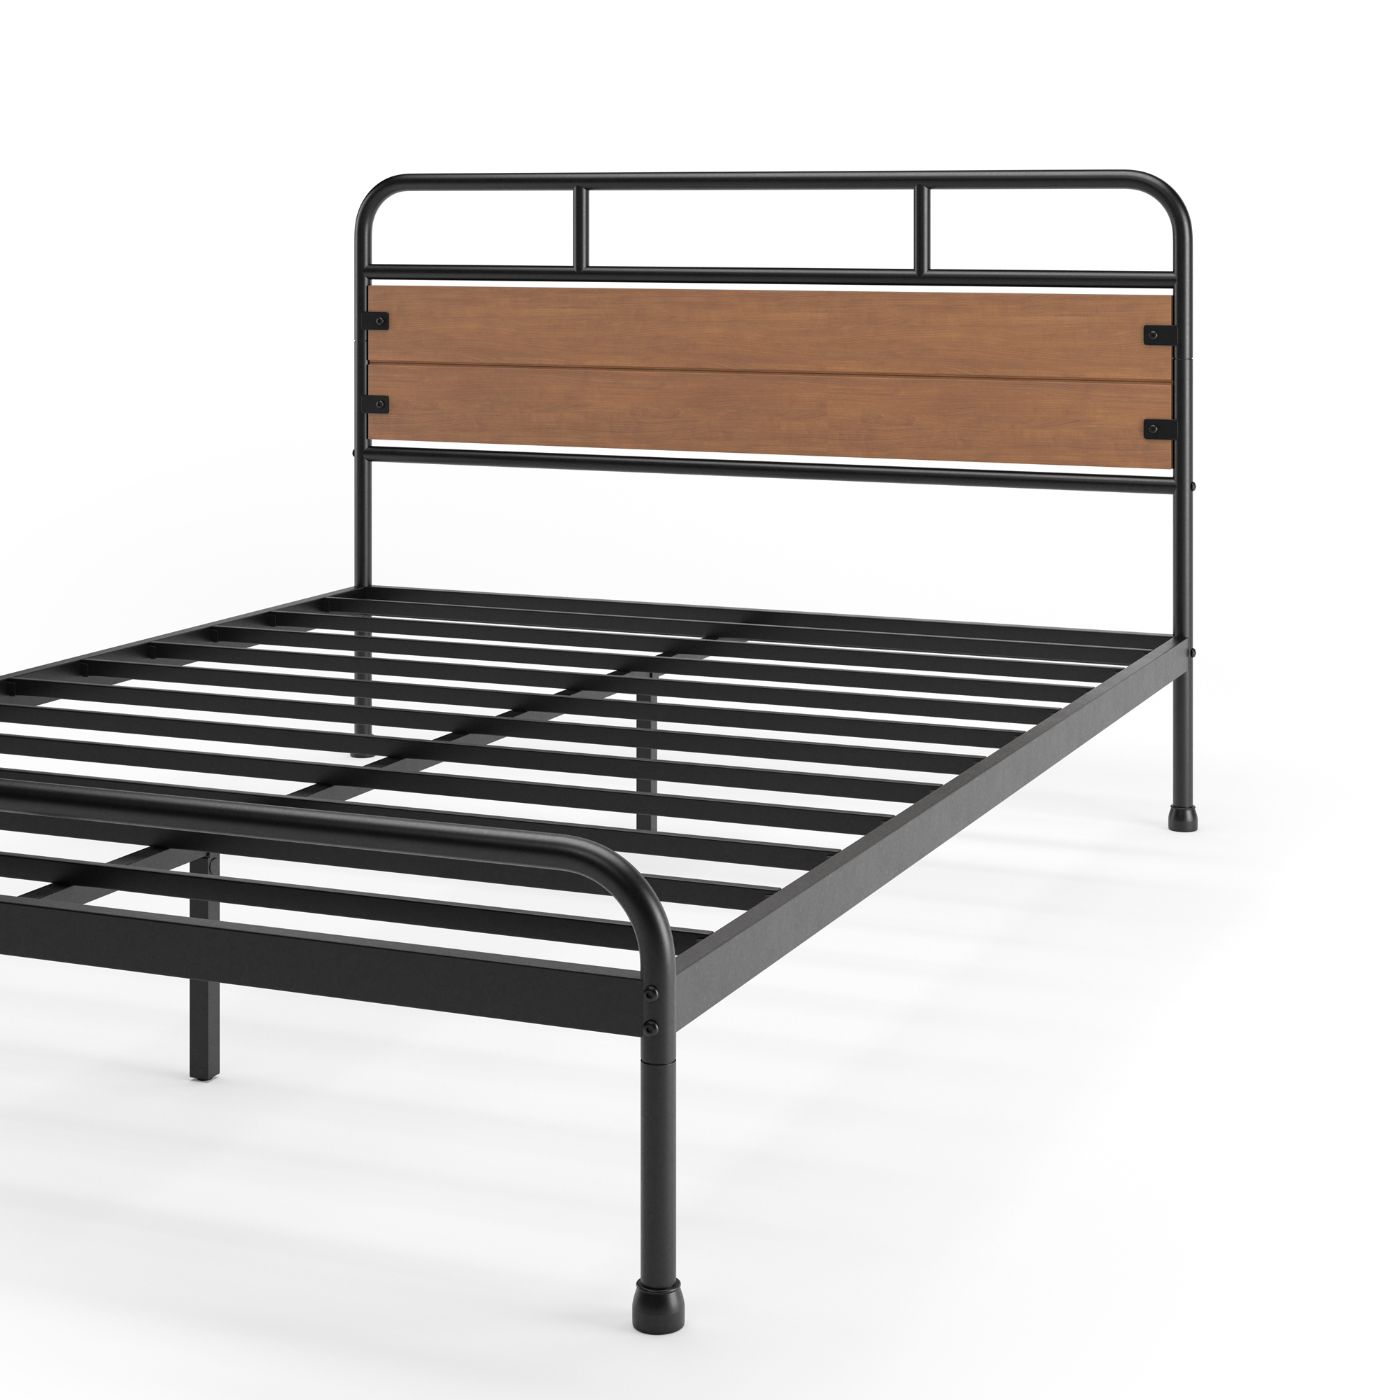 Eli Metal and Wood Platform Bed